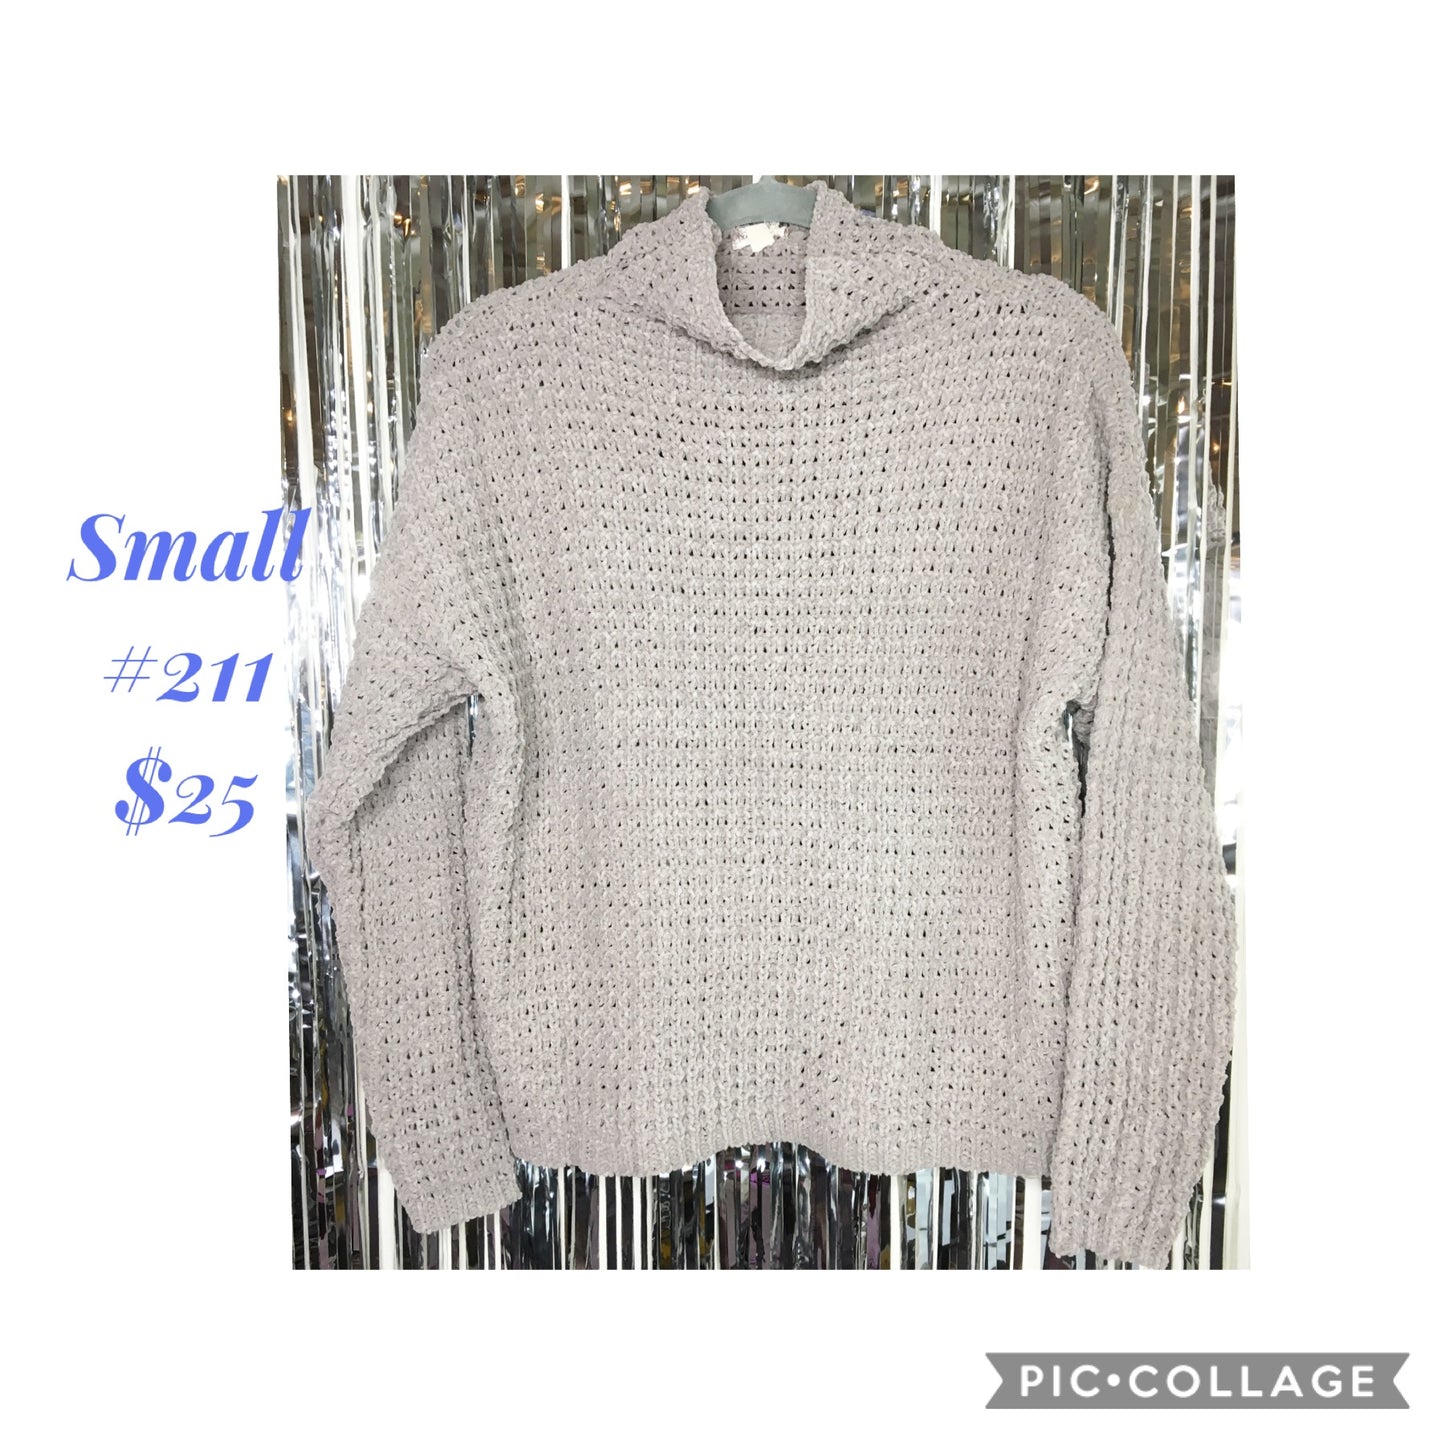 TBB Deals: Size Small